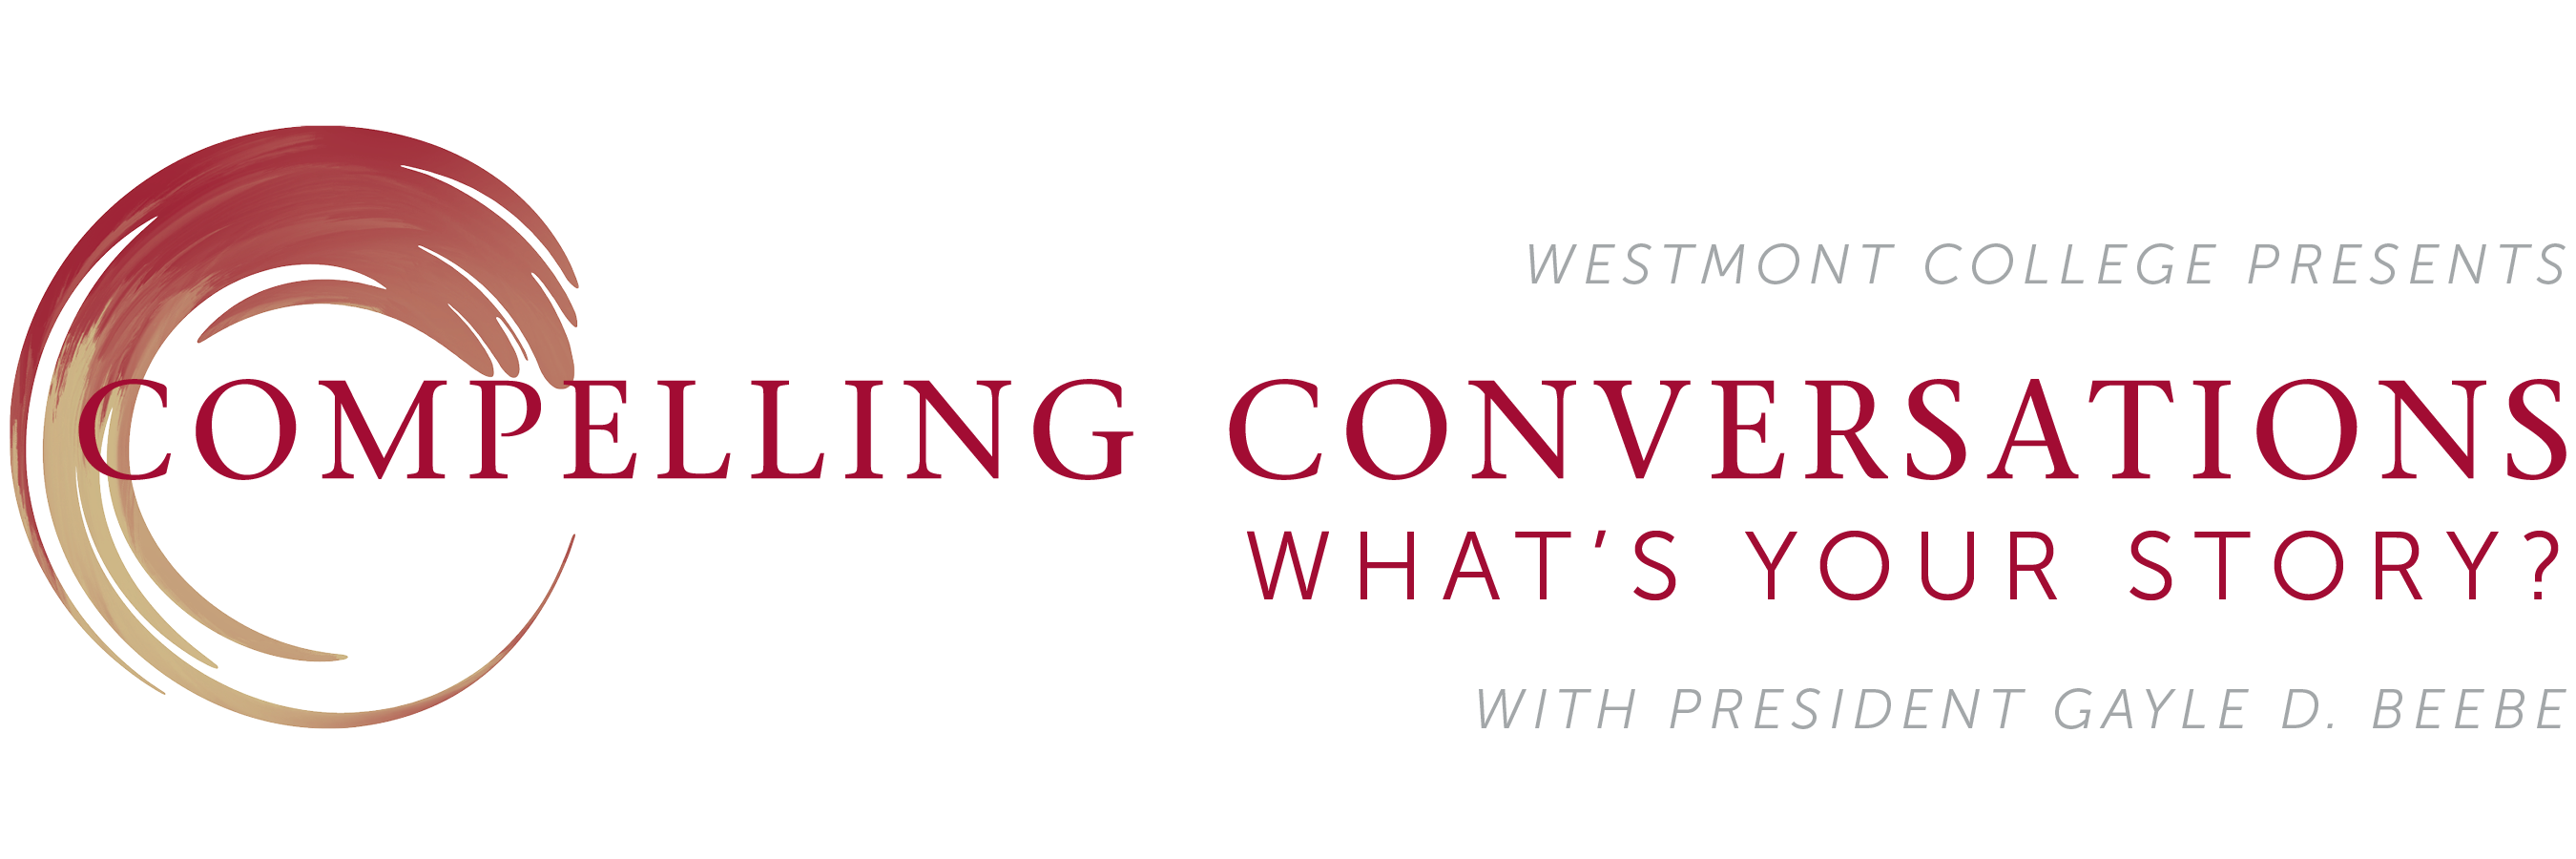 Compelling Conversations logo